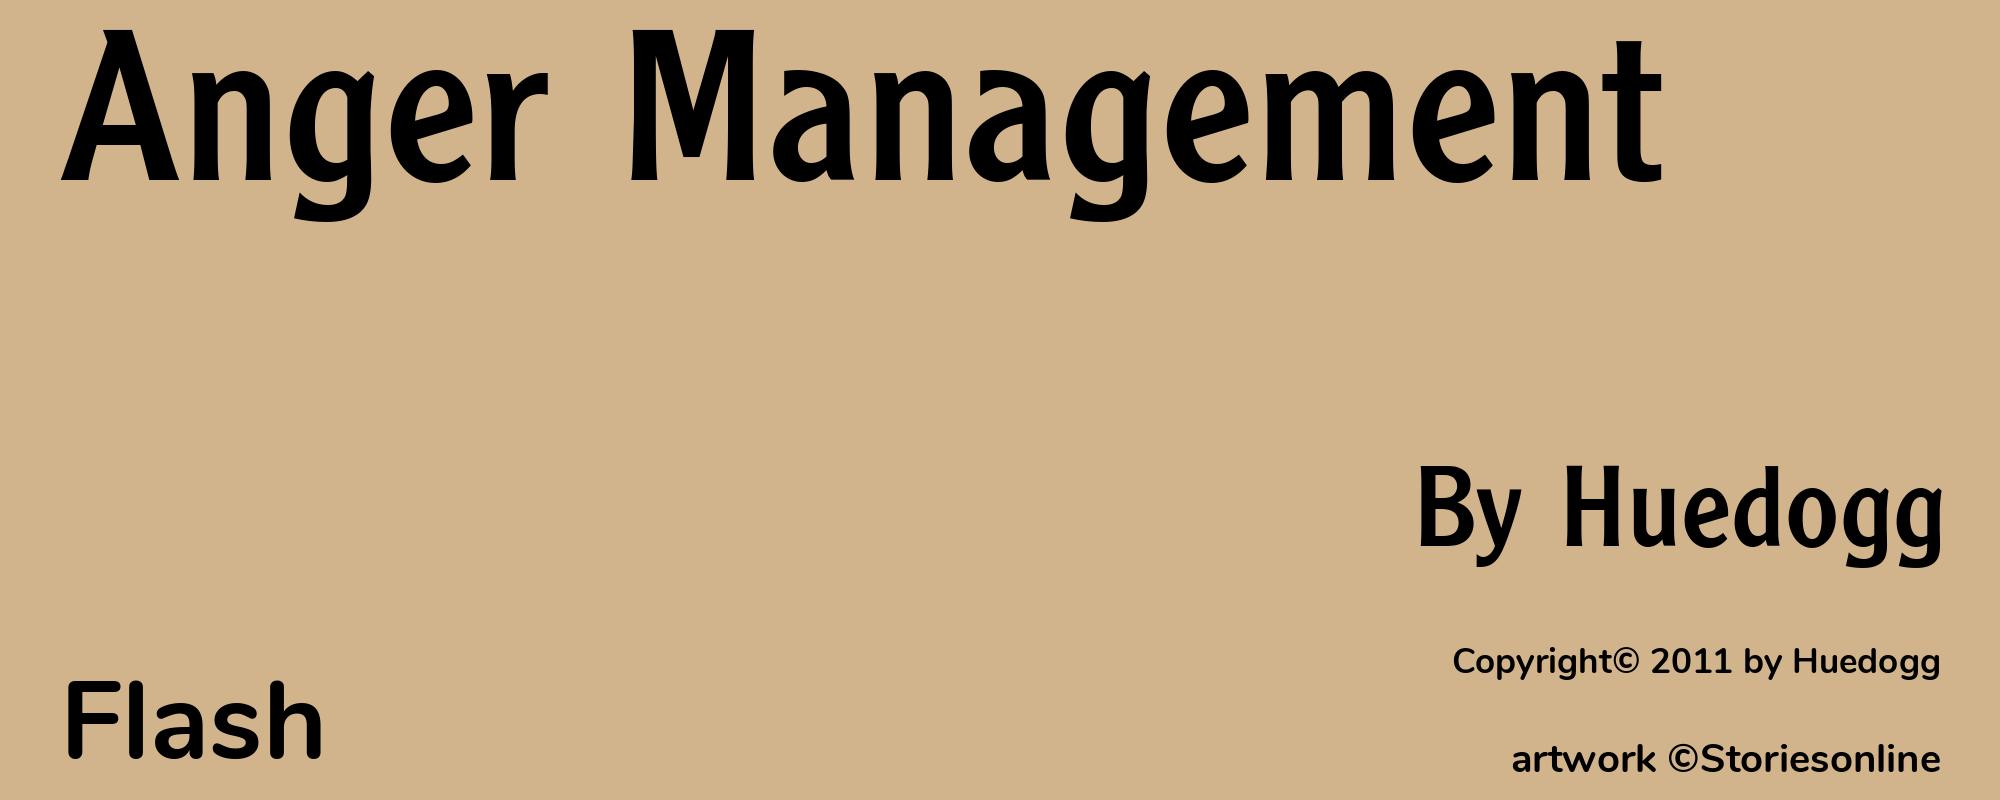 Anger Management - Cover